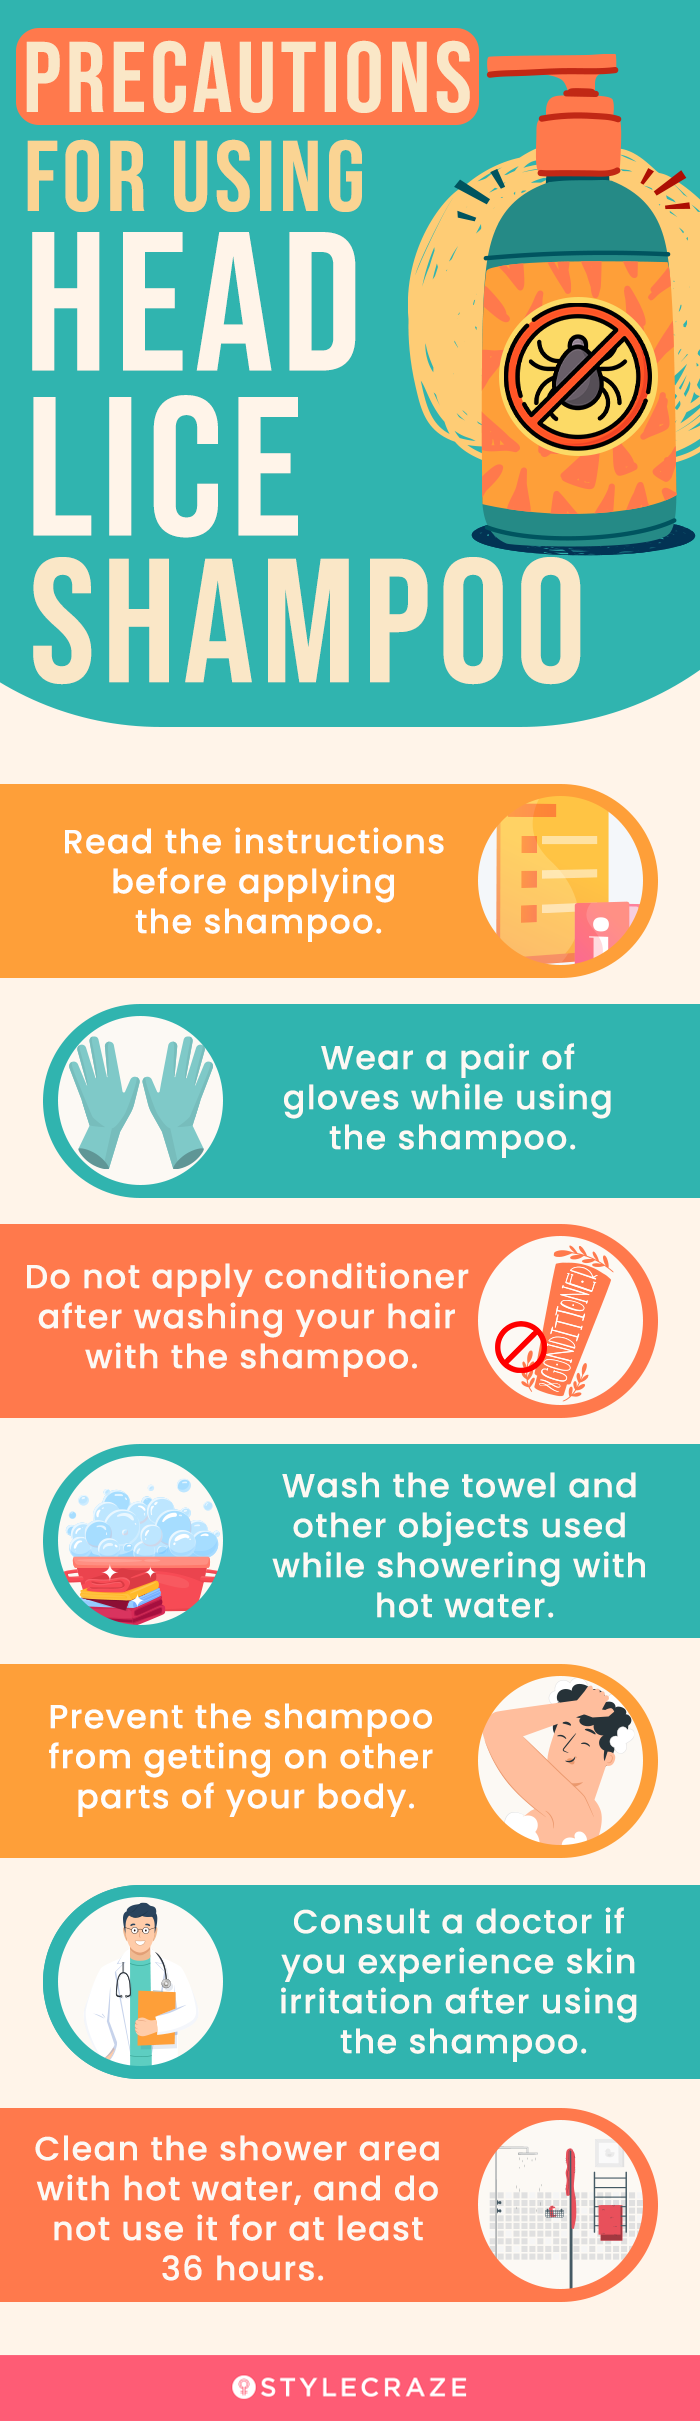 precautions for using head lice shampoo (infographic)